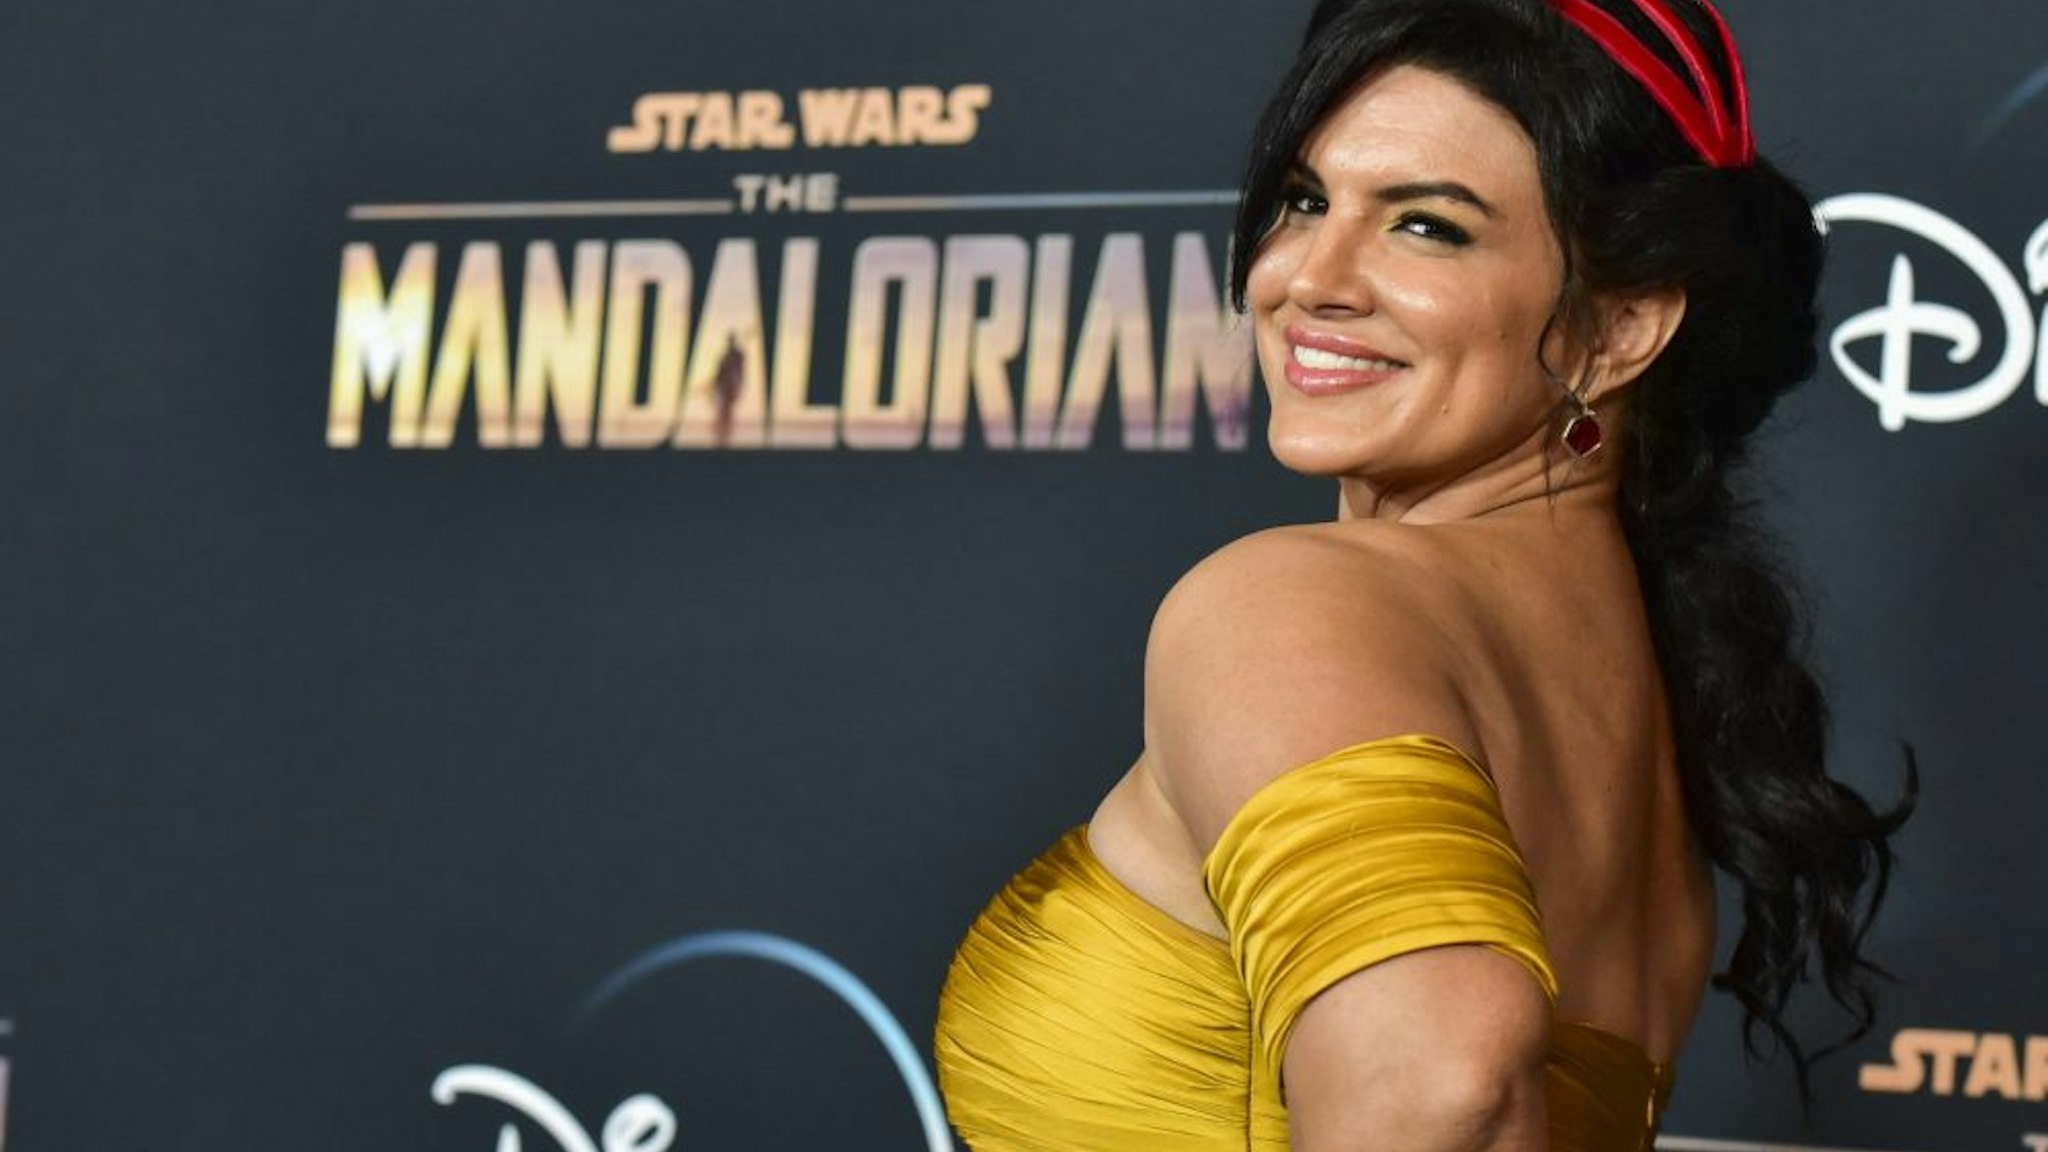 LOS ANGELES, CALIFORNIA - NOVEMBER 13: Gina Carano attends the premiere of Disney+'s "The Mandalorian" at El Capitan Theatre on November 13, 2019 in Los Angeles, California.